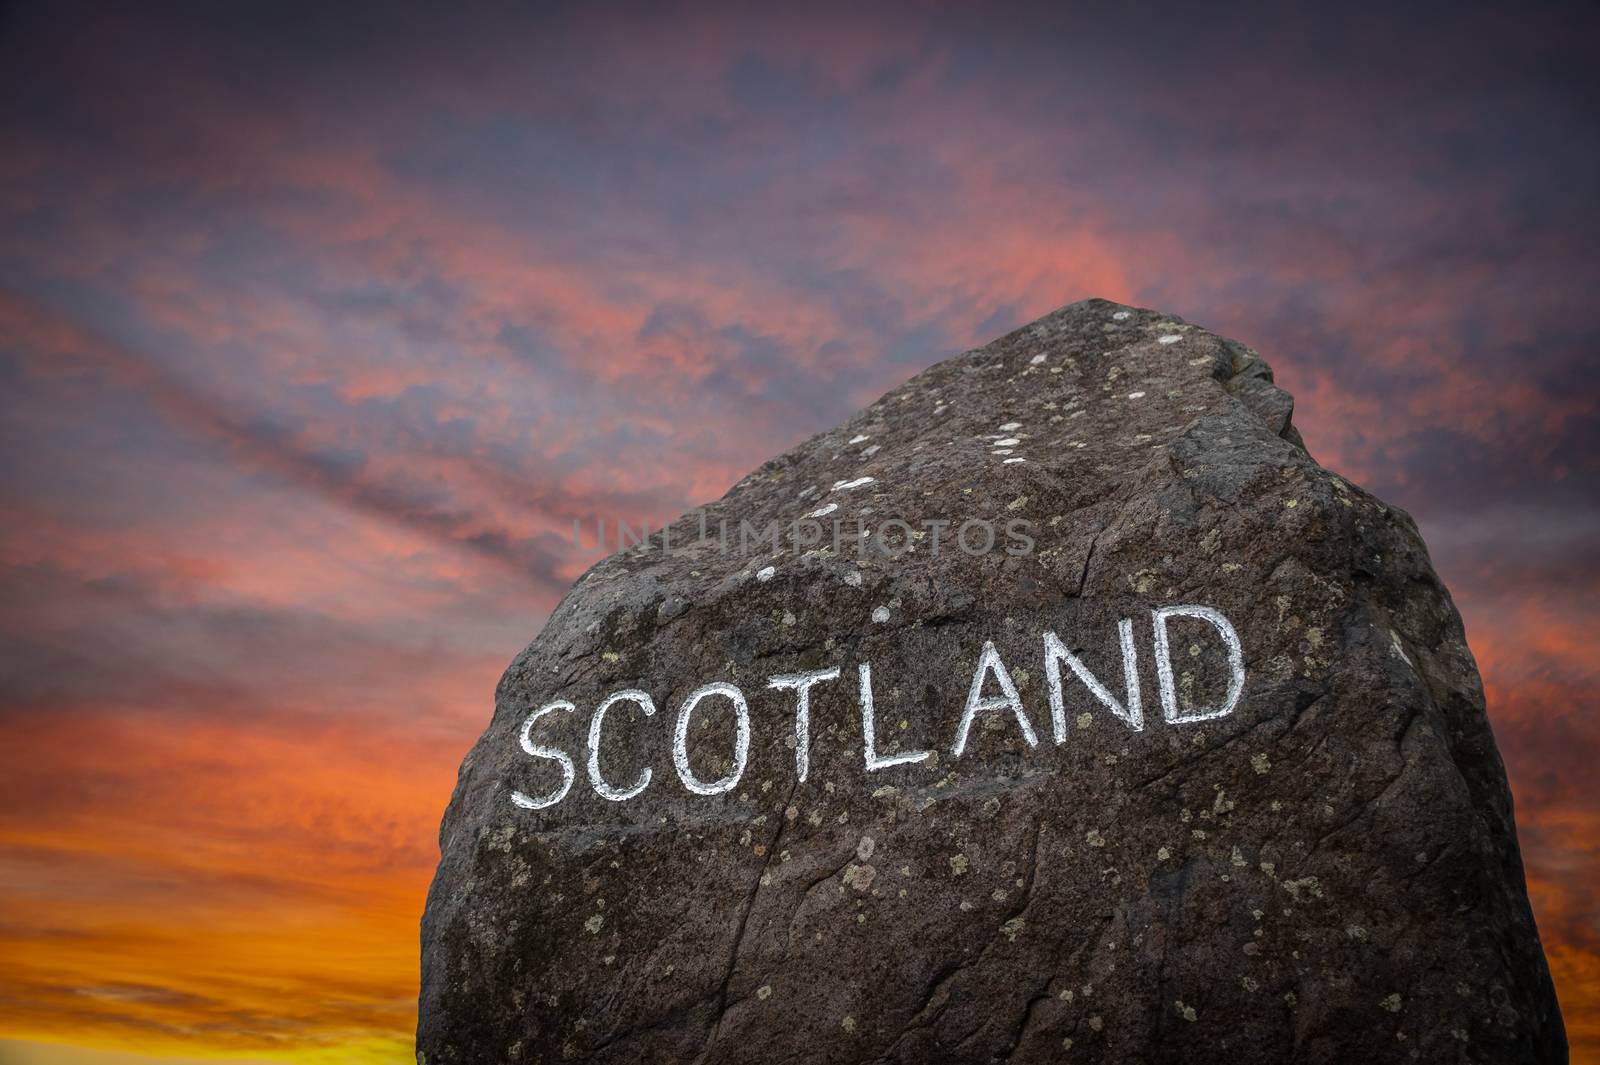 The Scottish Border Sign At Sunset by mrdoomits